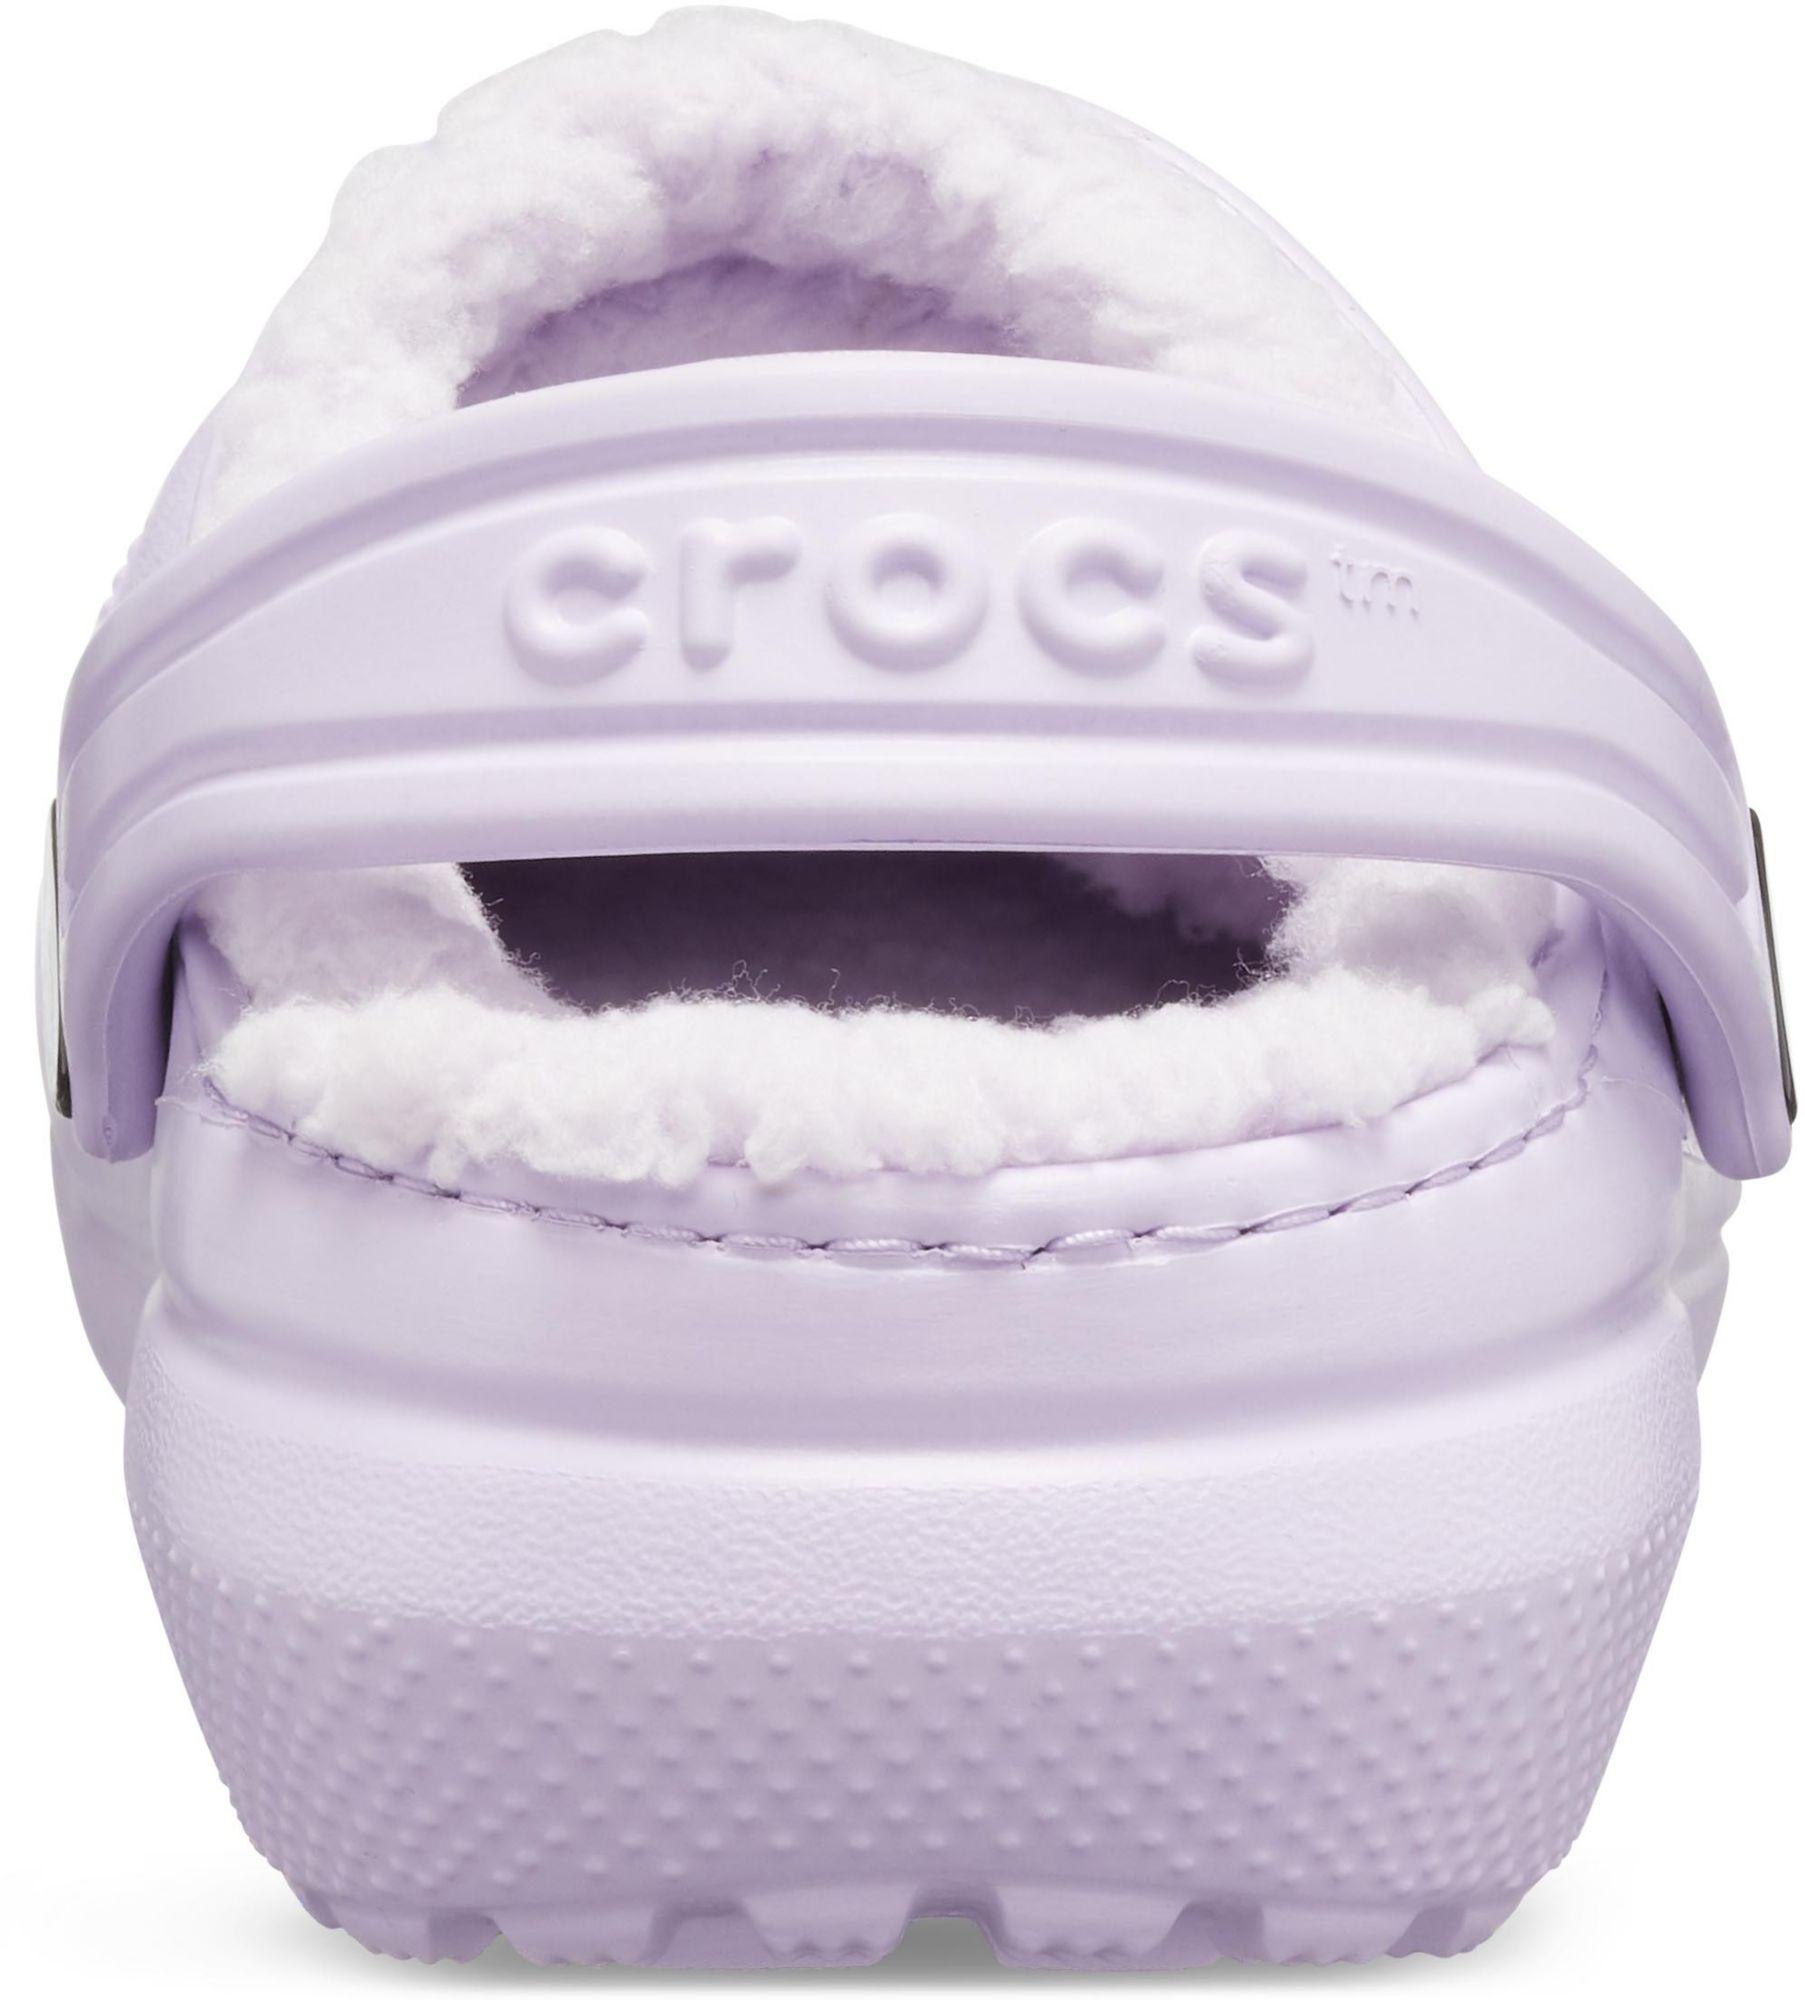 lavender crocs fuzzy